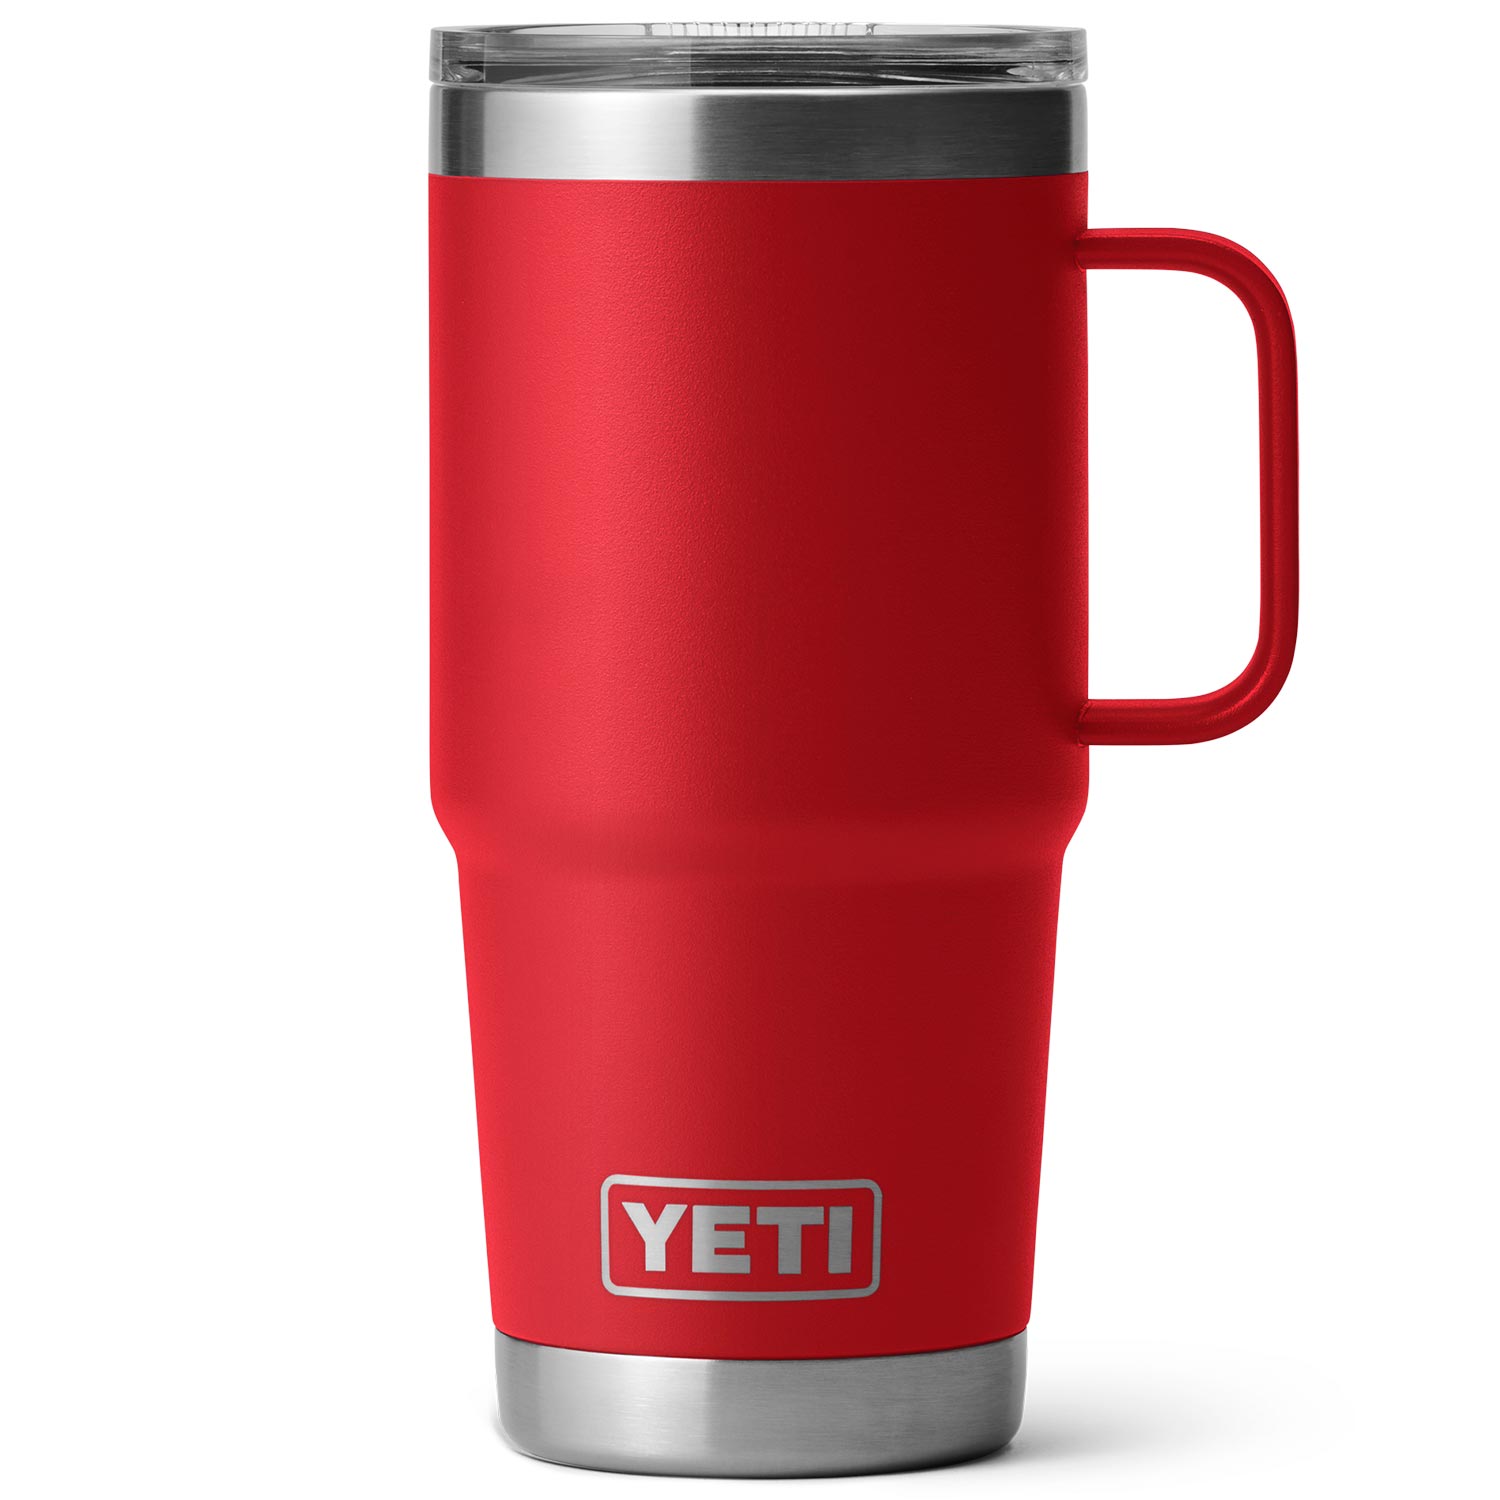 Yeti Rambler 20 oz Travel Mug with Stronghold Lid - Black